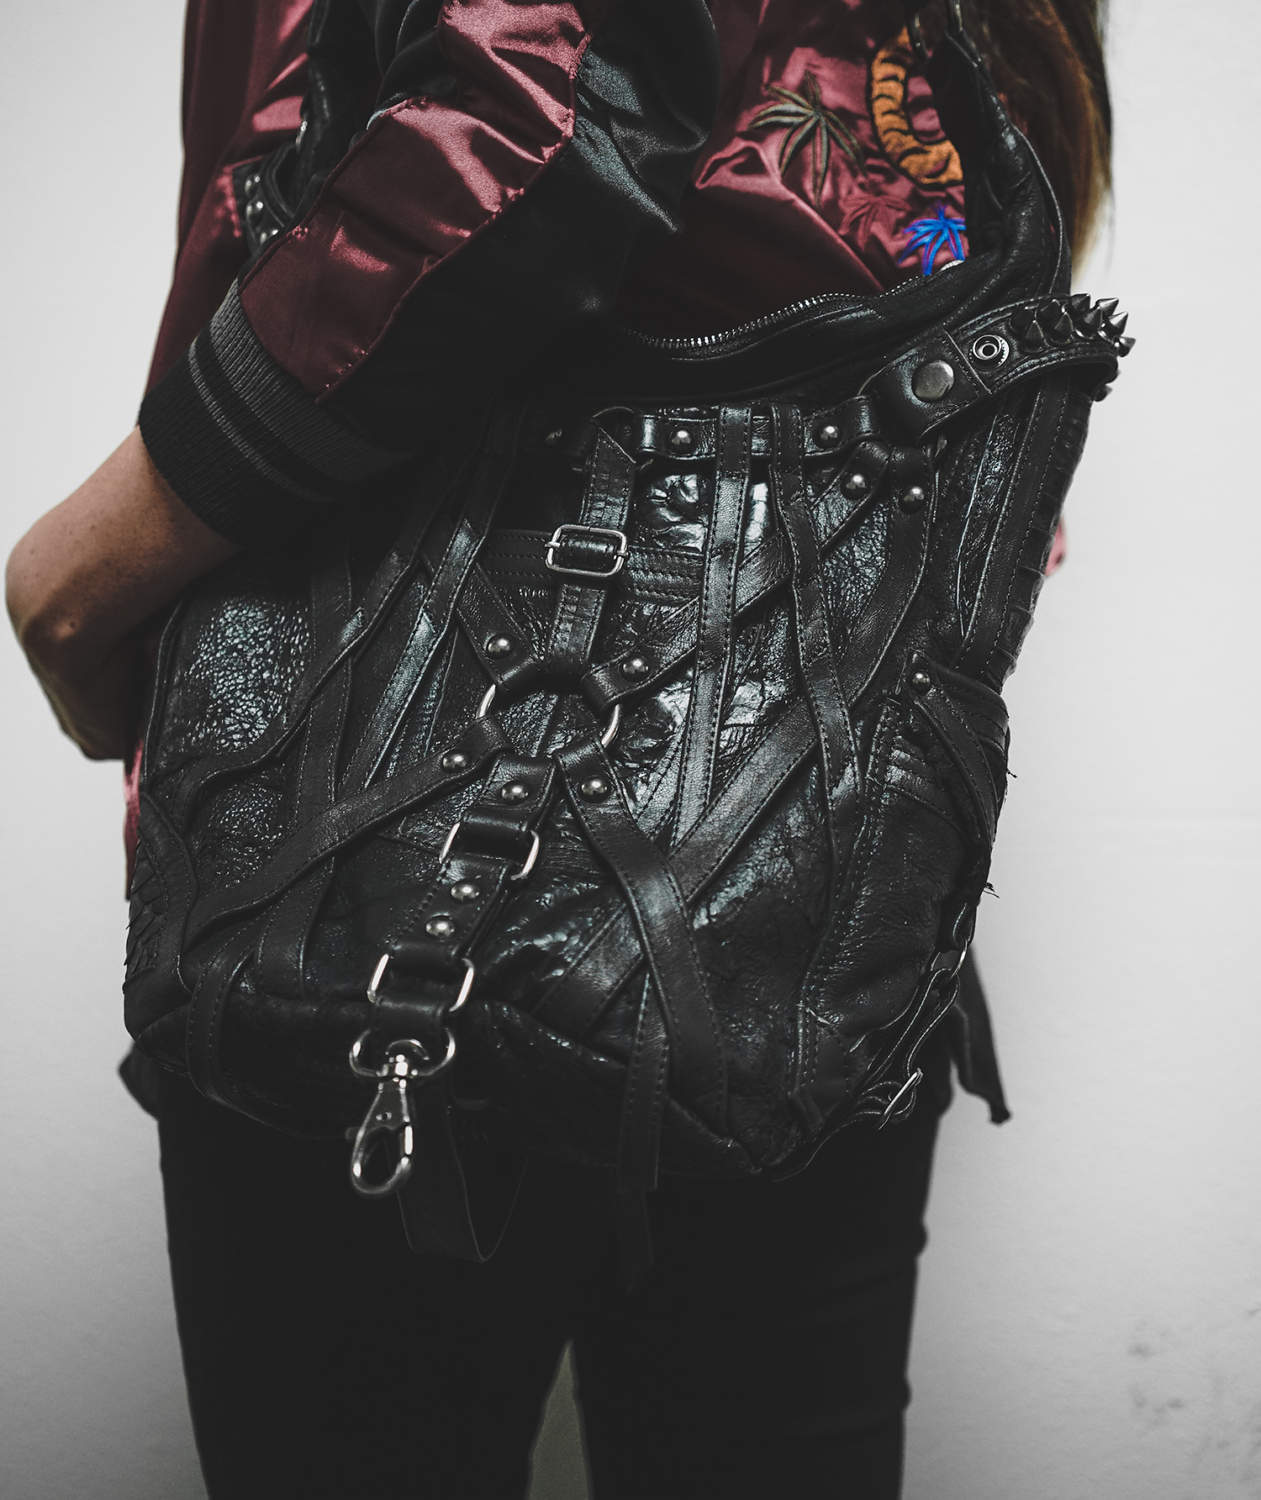 Mini RAGE CAGE Black Leather Hobo Shoulder Bag by Jungle Tribe